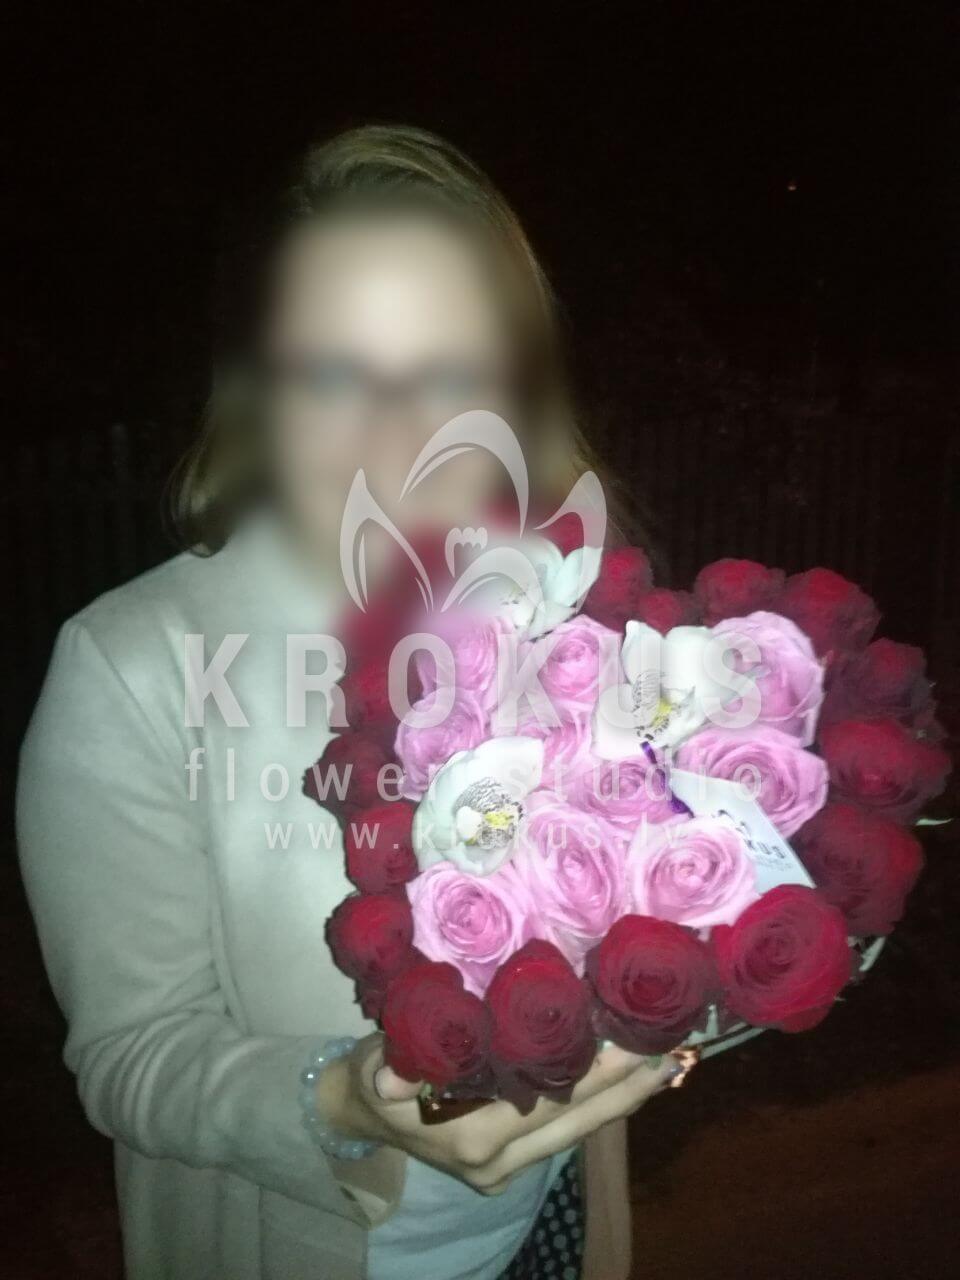 Deliver flowers to Tukums (pink rosesorchidsred roses)